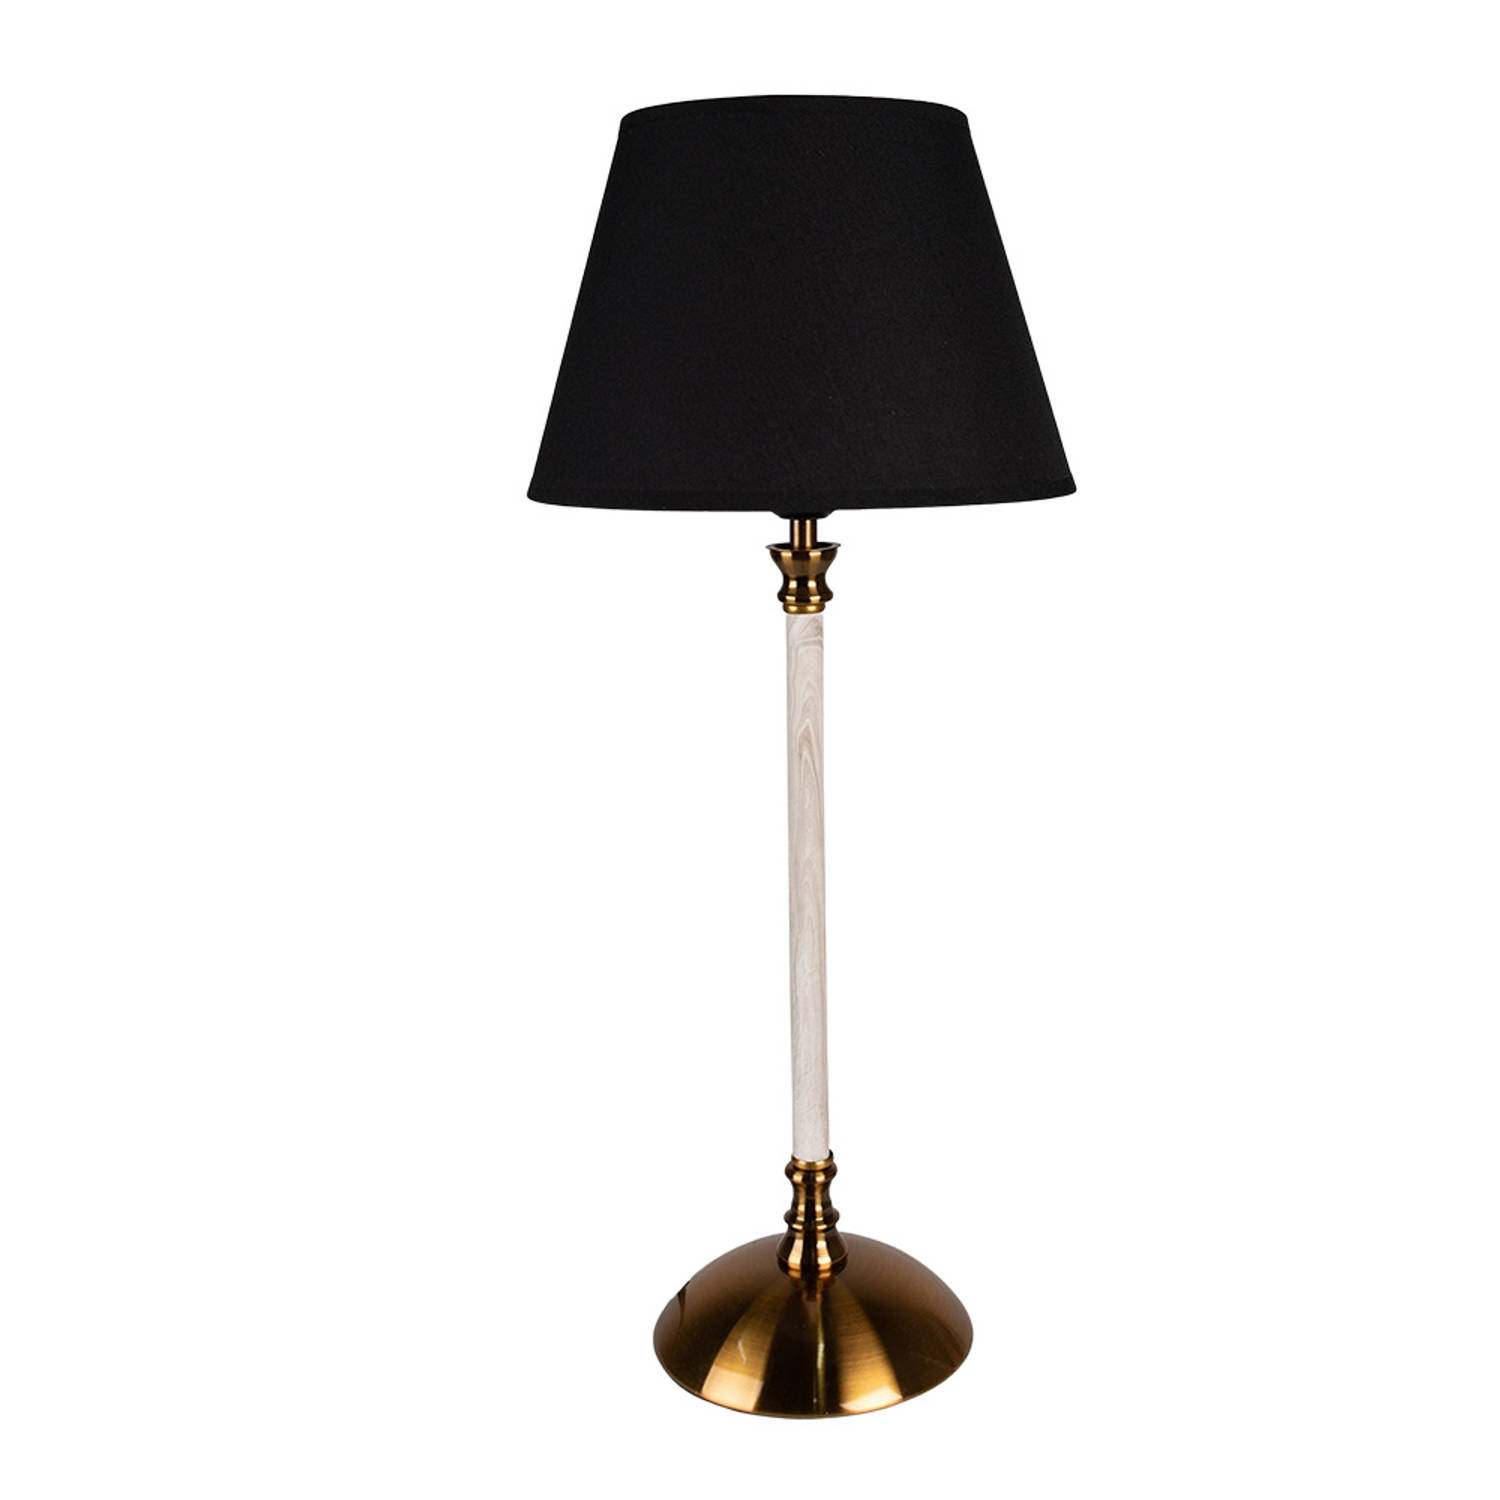 HAES DECO - Tafellamp - Dramatic Chic - Vintage / Retro Lamp, formaat Ø 22x53 cm - Goudkleurig / Wit met Zwarte Lampenkap - Bureaulamp, Sfeerlamp, Nachtlampje